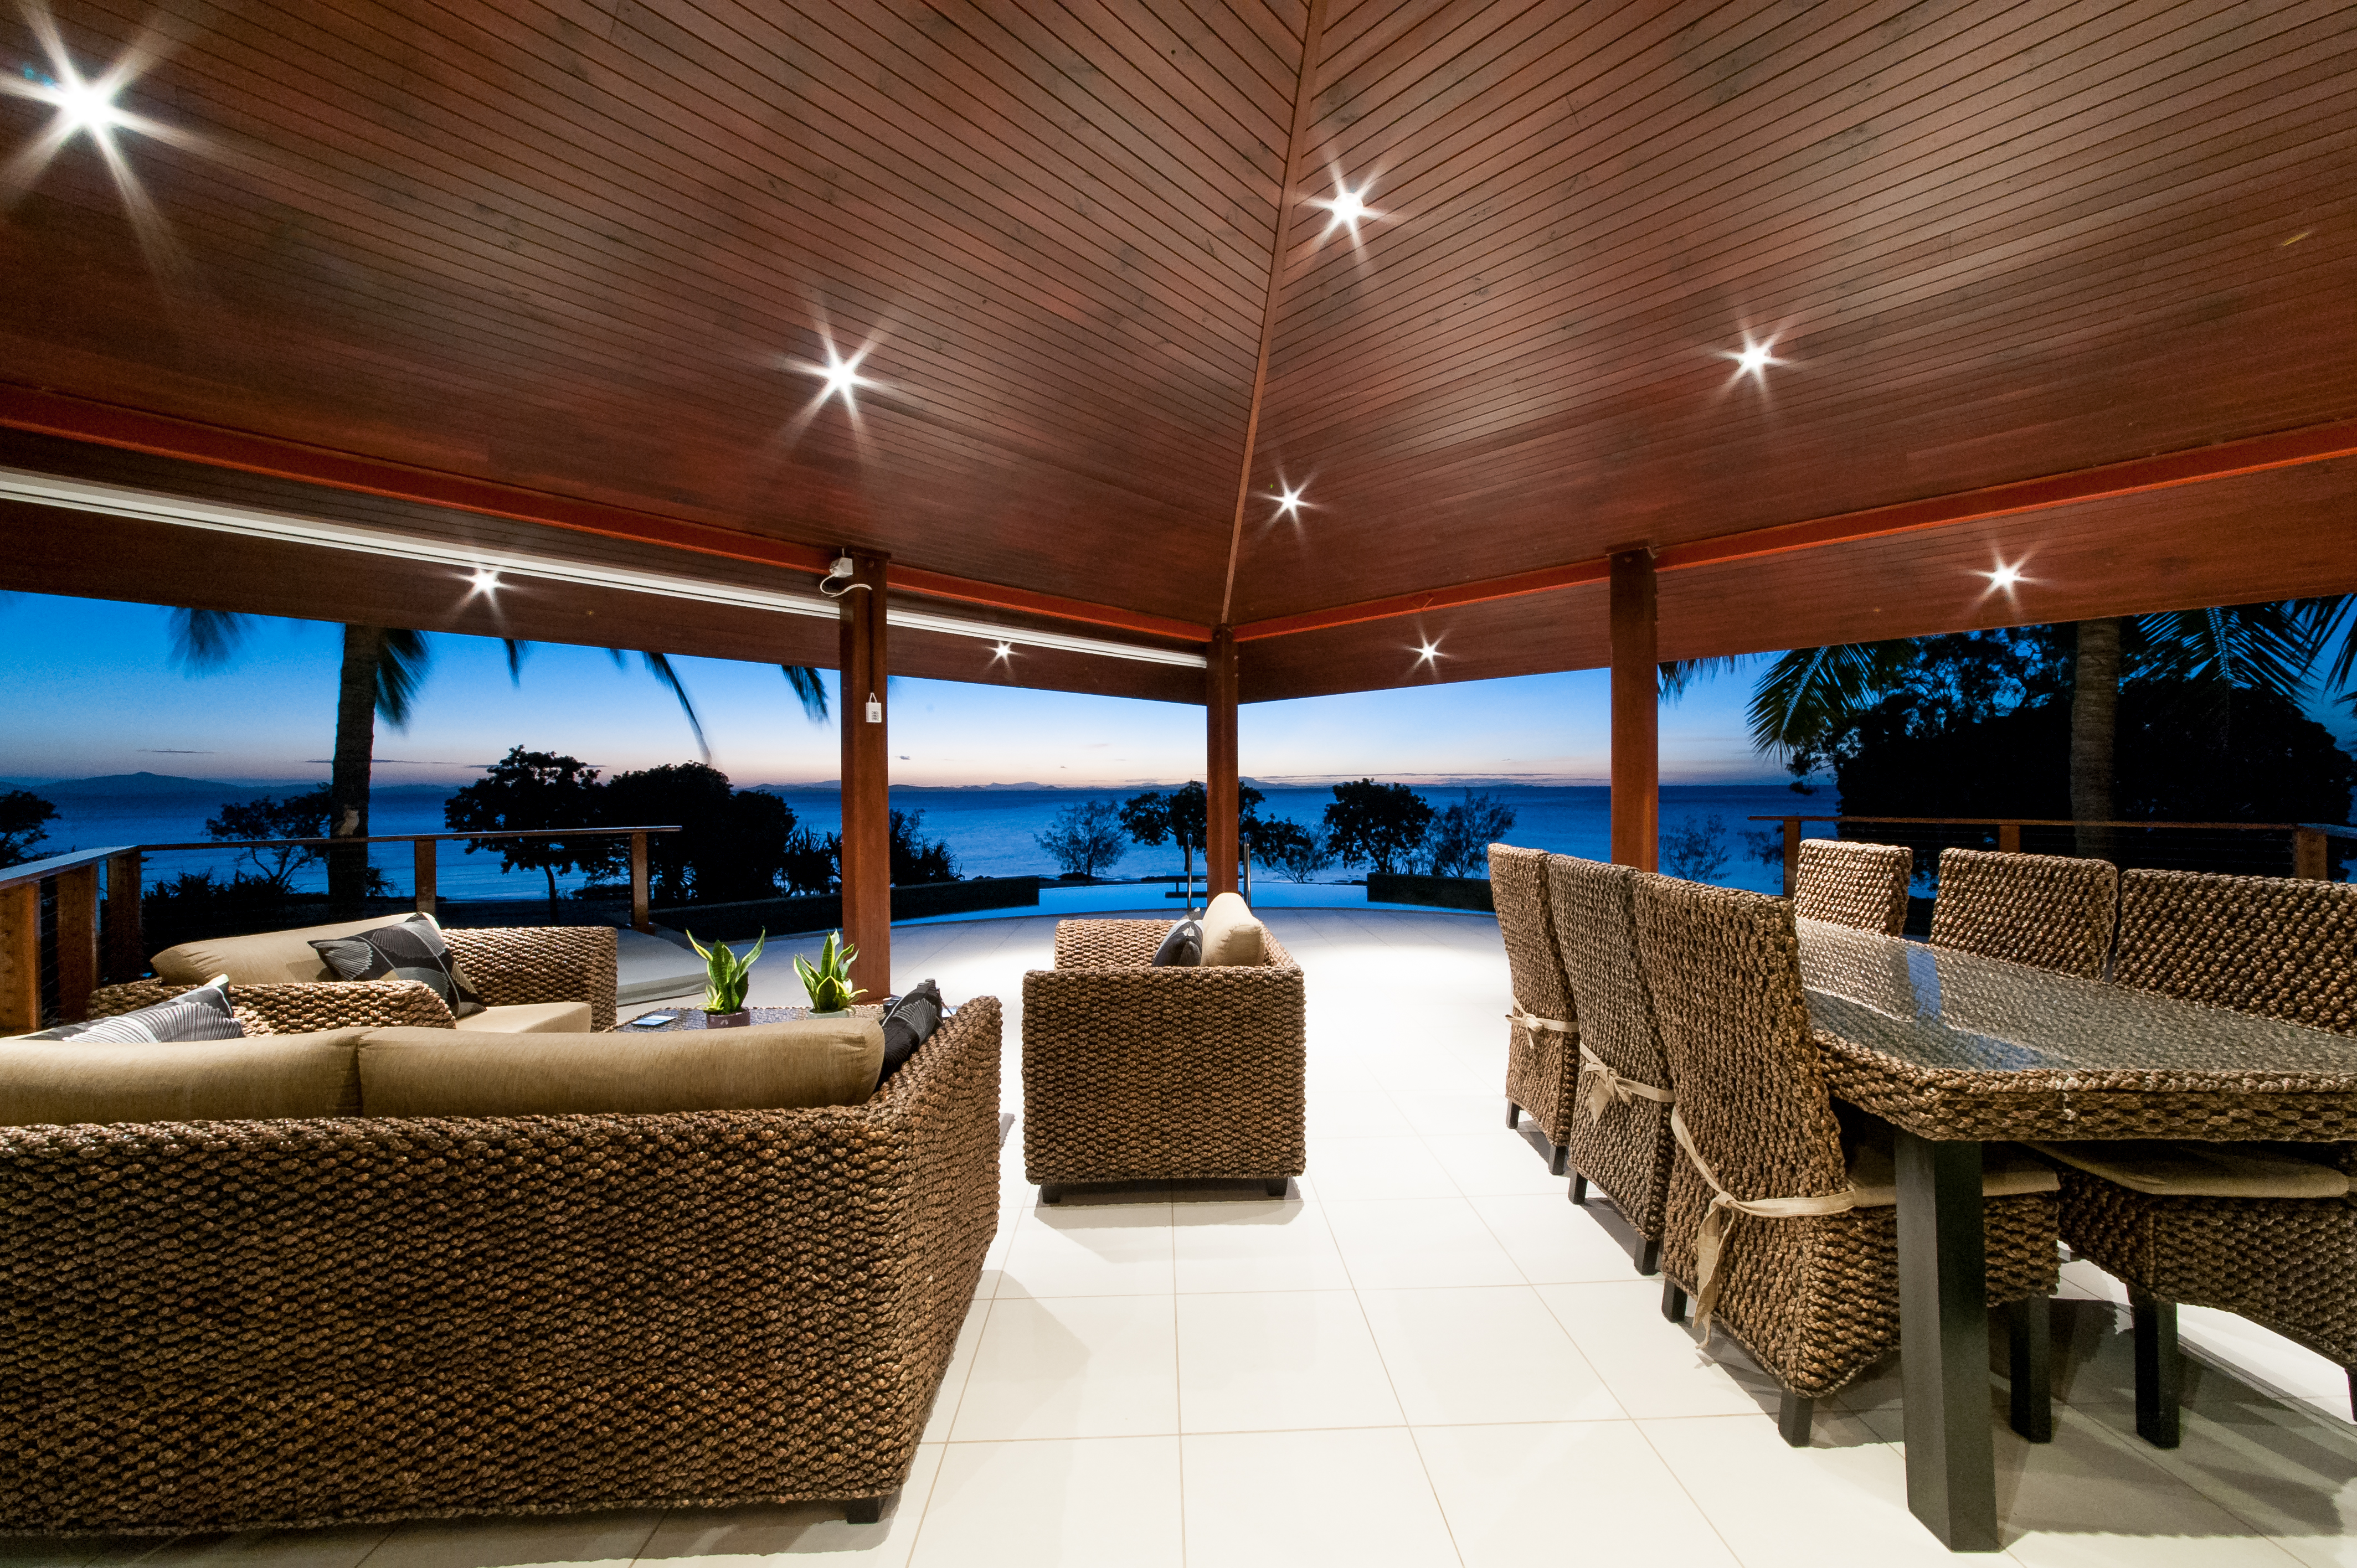 Australias best beach house hits the market